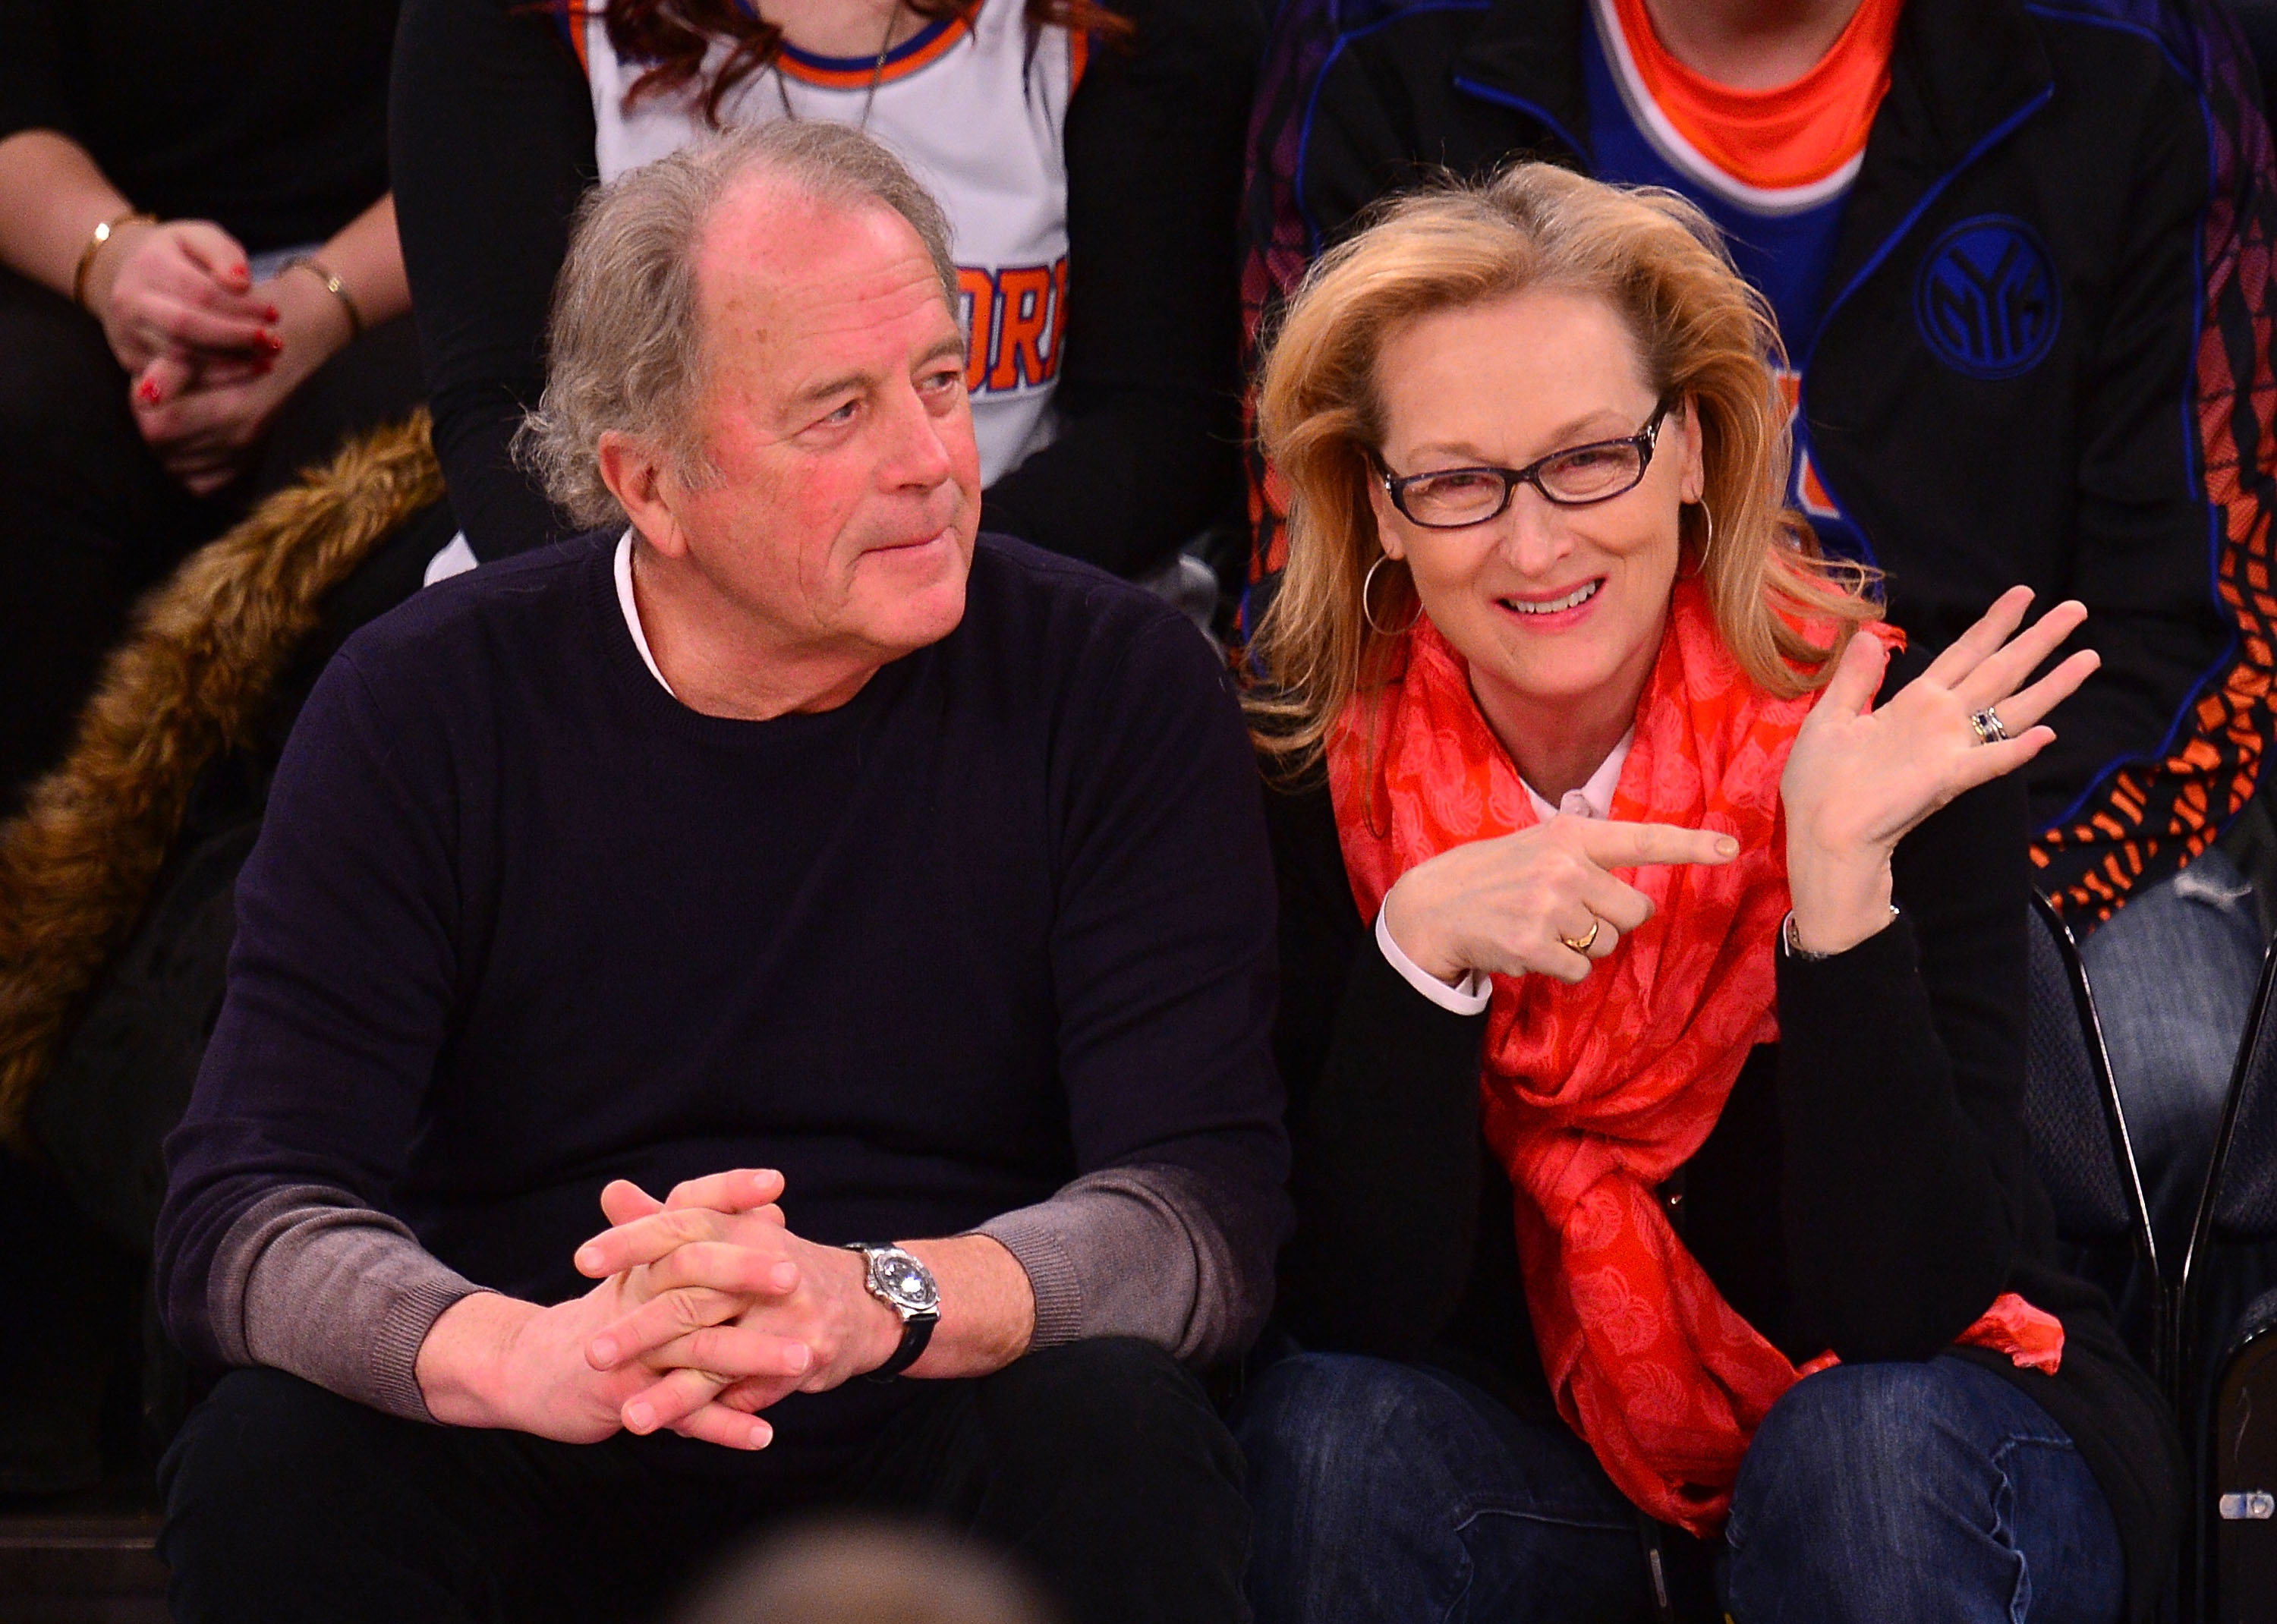 Don Gummer et Meryl Streep assistent au match Los Angeles Lakers vs New York Knicks au Madison Square Garden le 26 janvier 2014 à New York. | Source : Getty Images